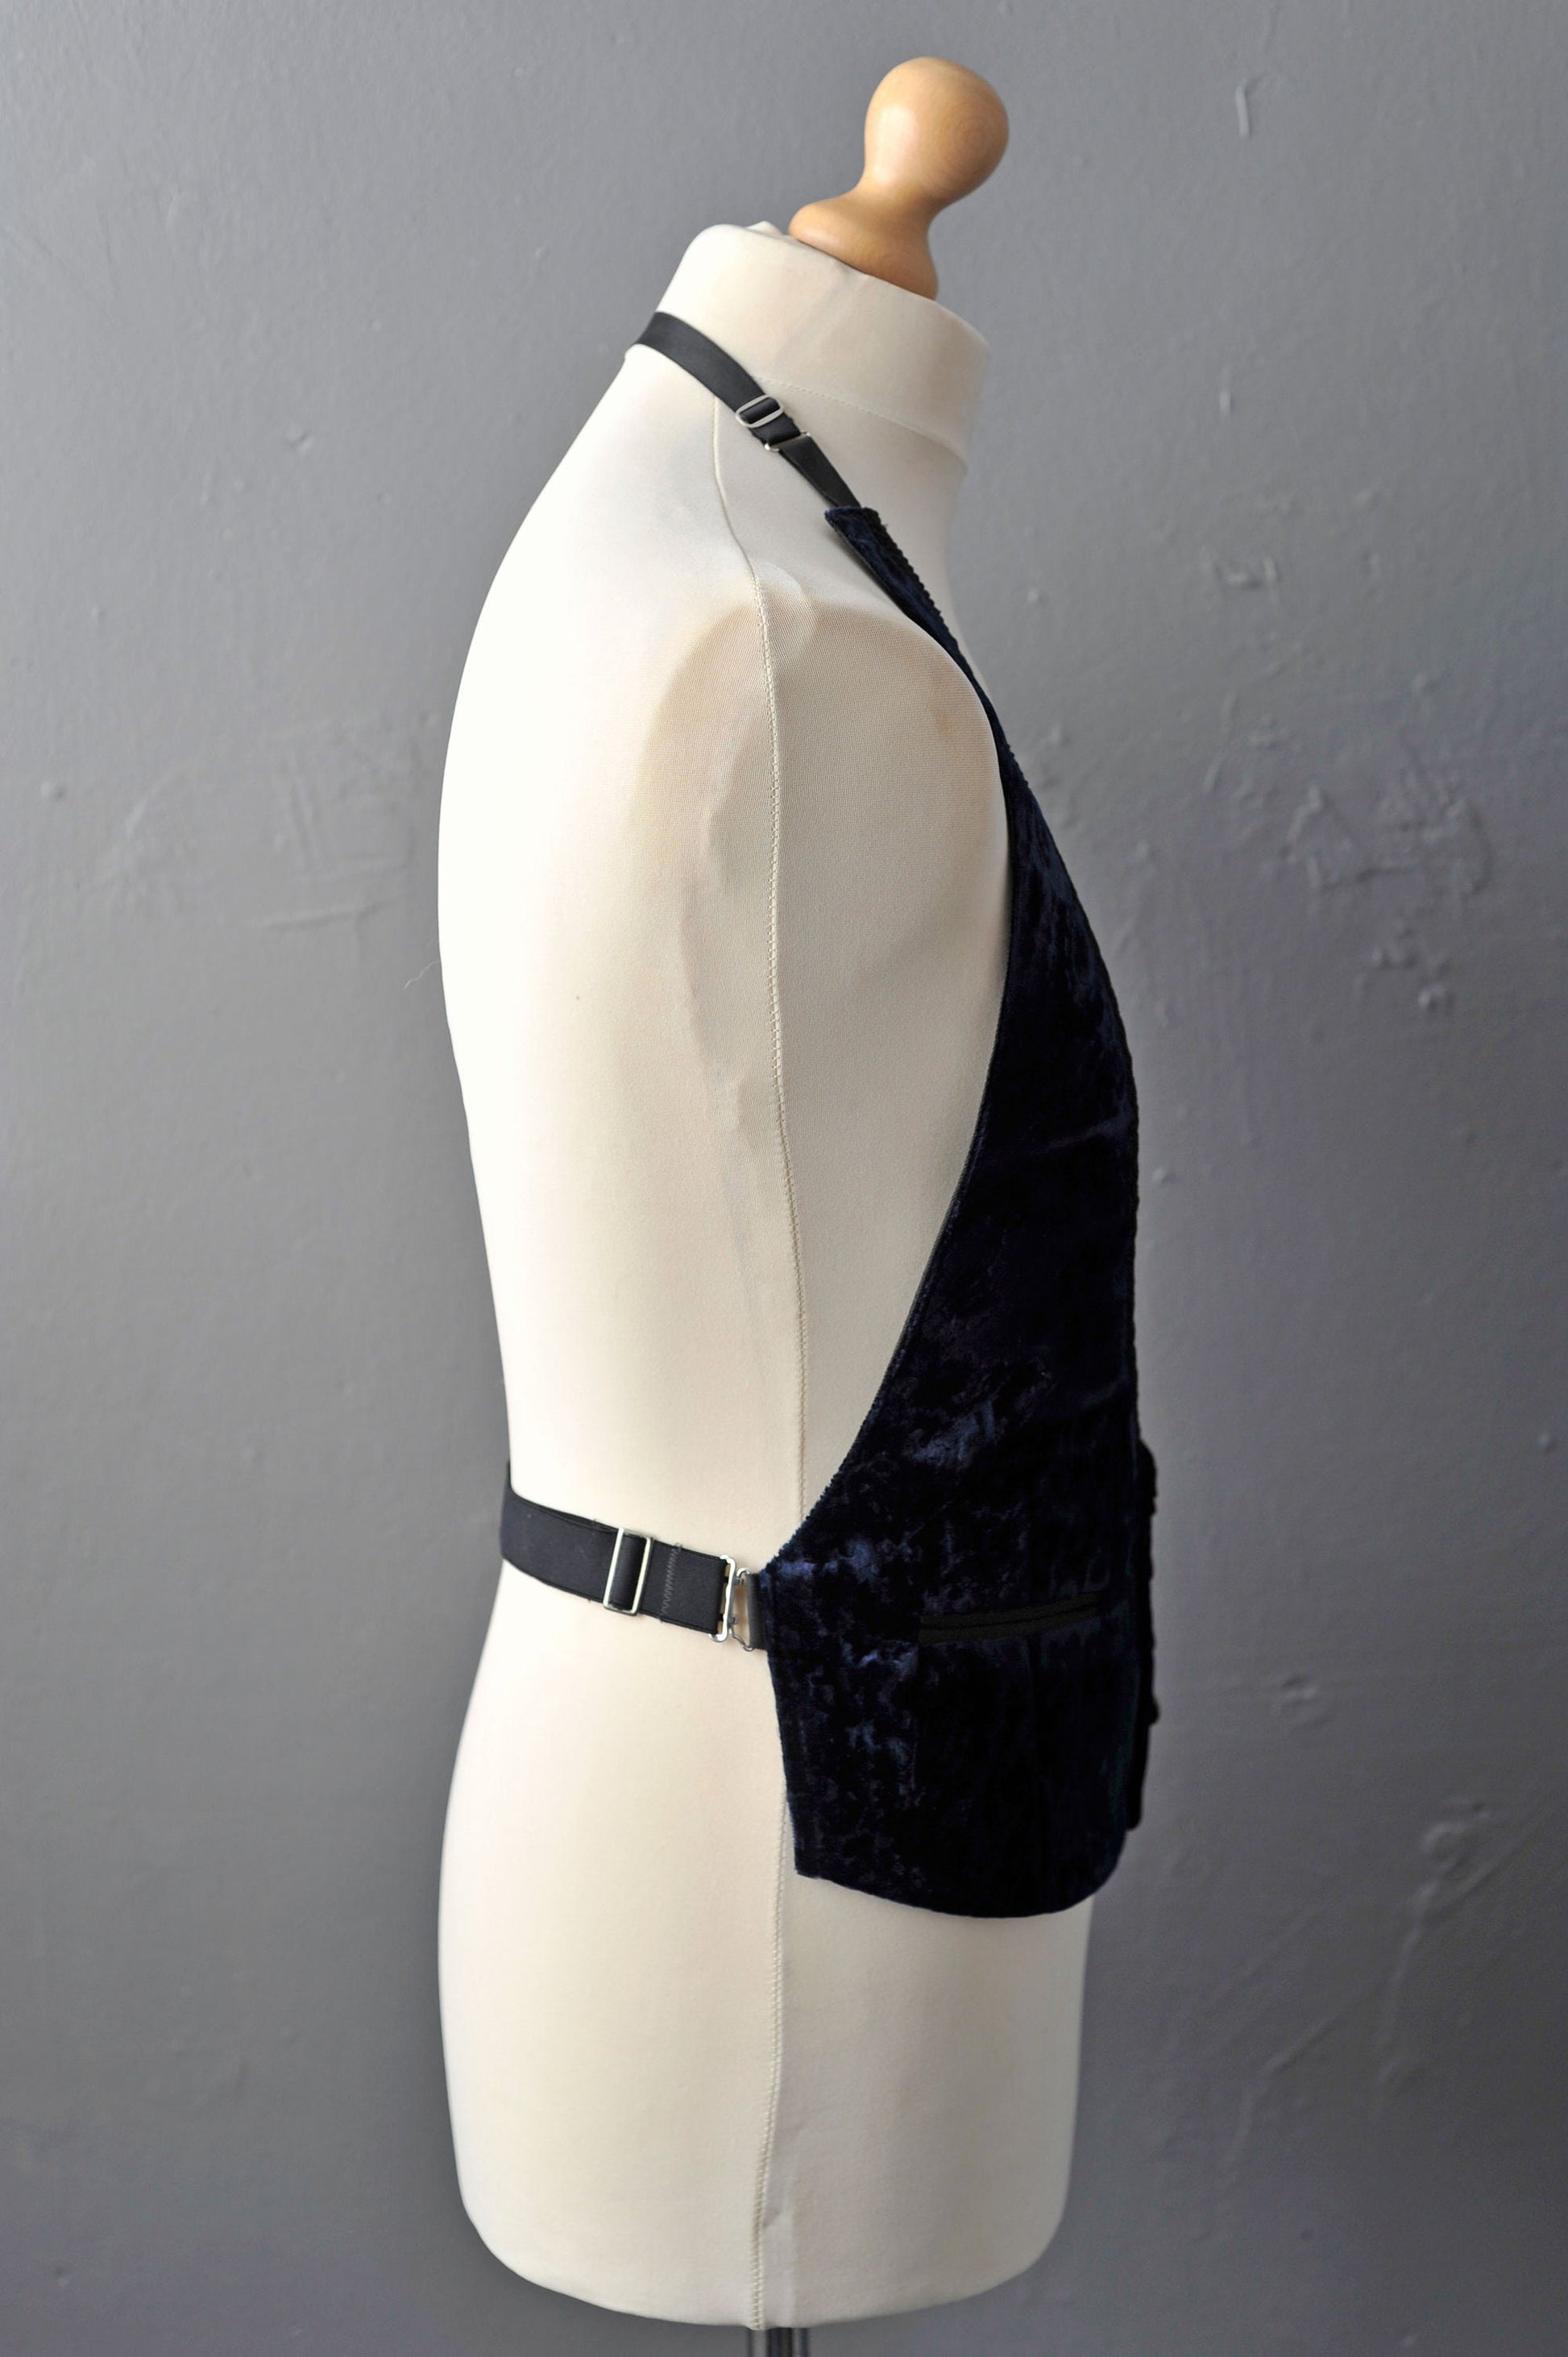 60s Paisley Velvet Waistcoat by Akco, Adjustable U Neck Open Back Vest, 42 Chest